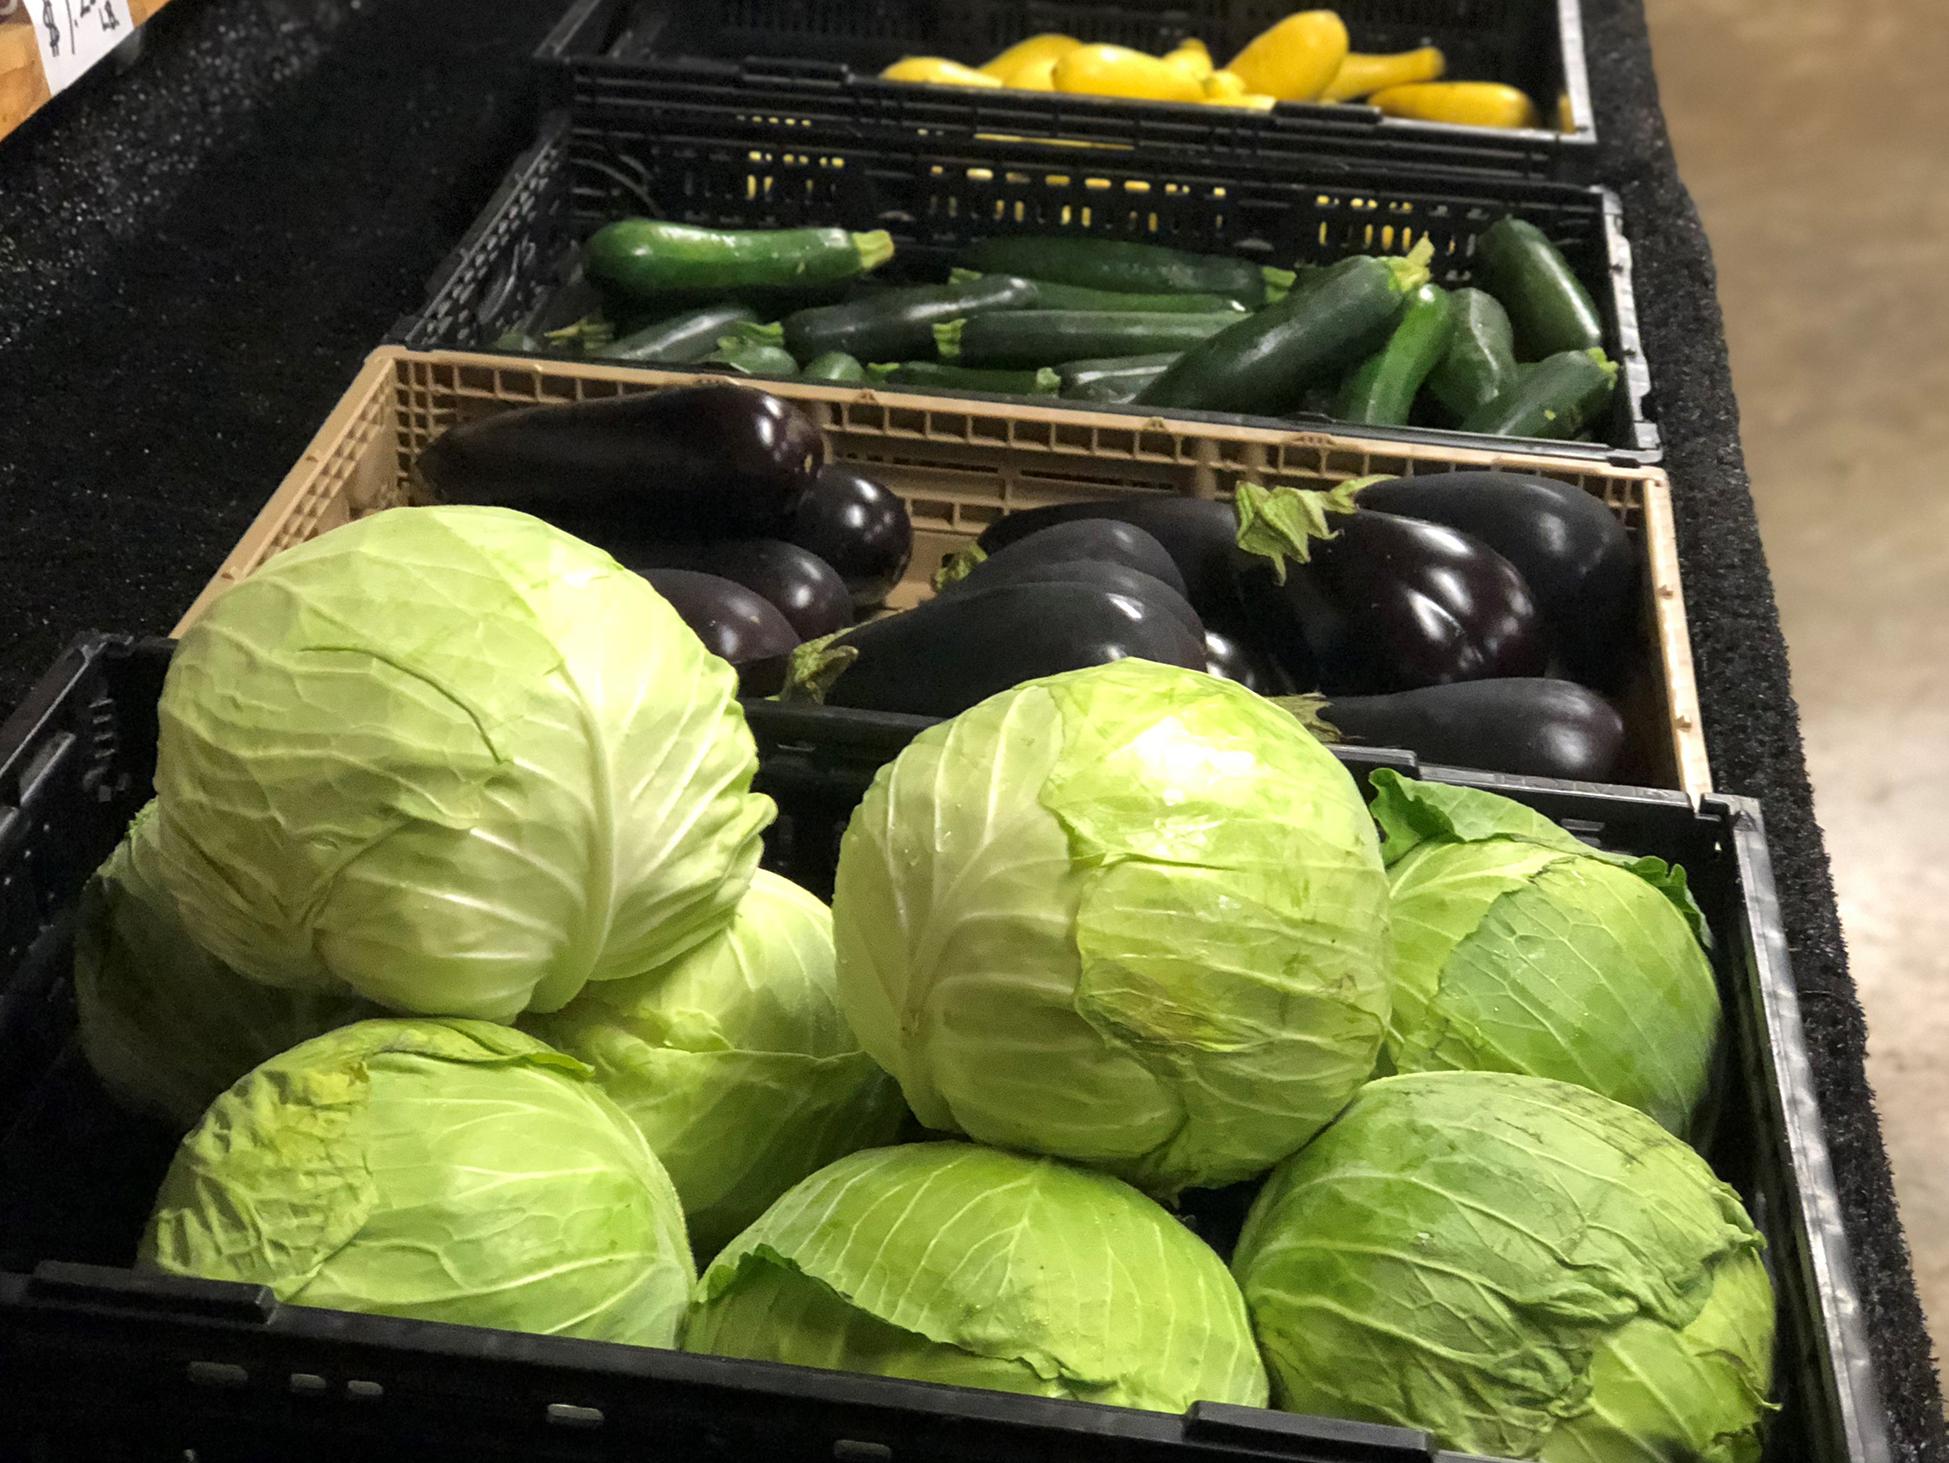 Light green lettuce, dark purple eggplant and cucumbers sit on black shelves.